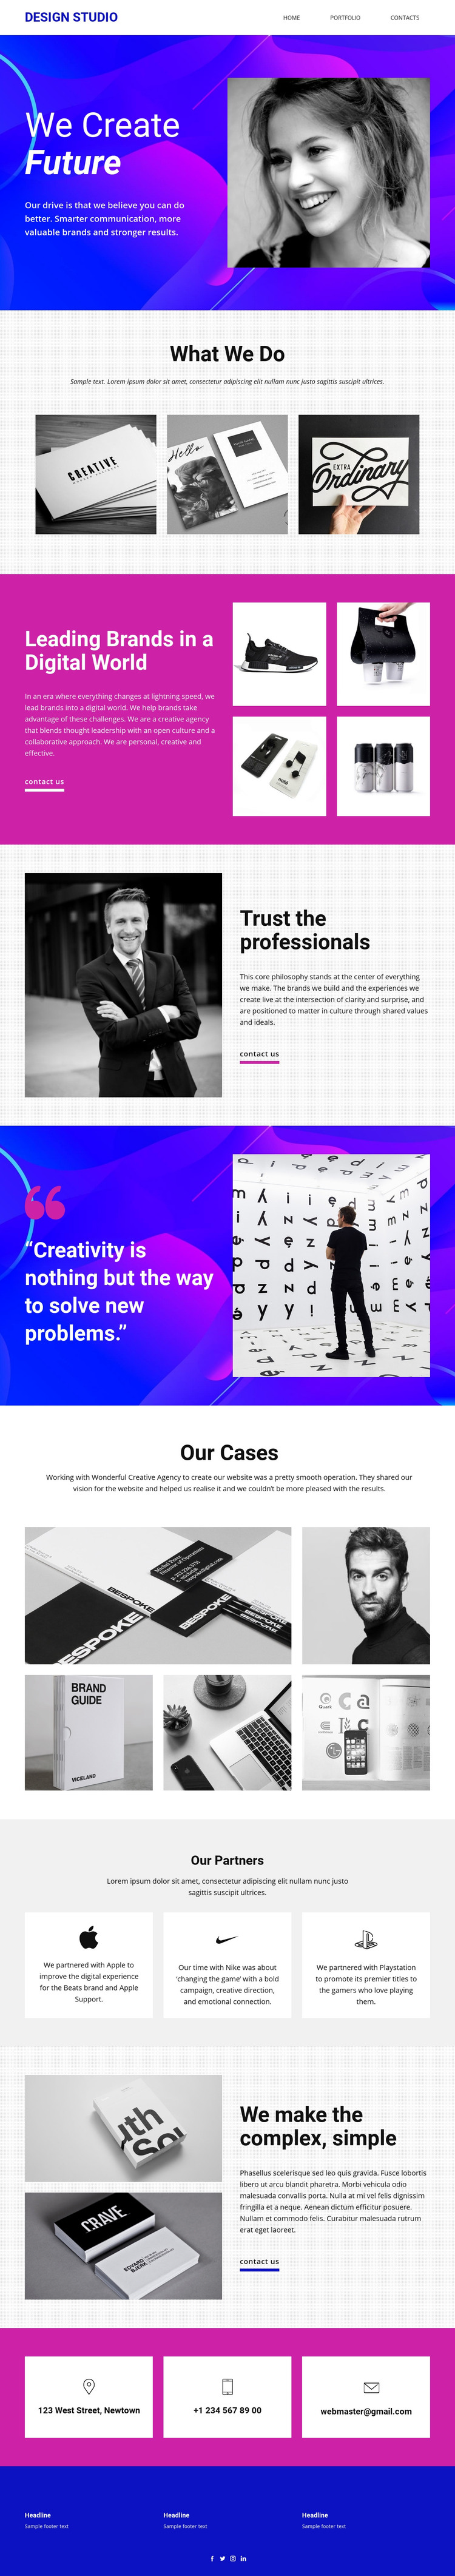 We develop the brand’s core Homepage Design